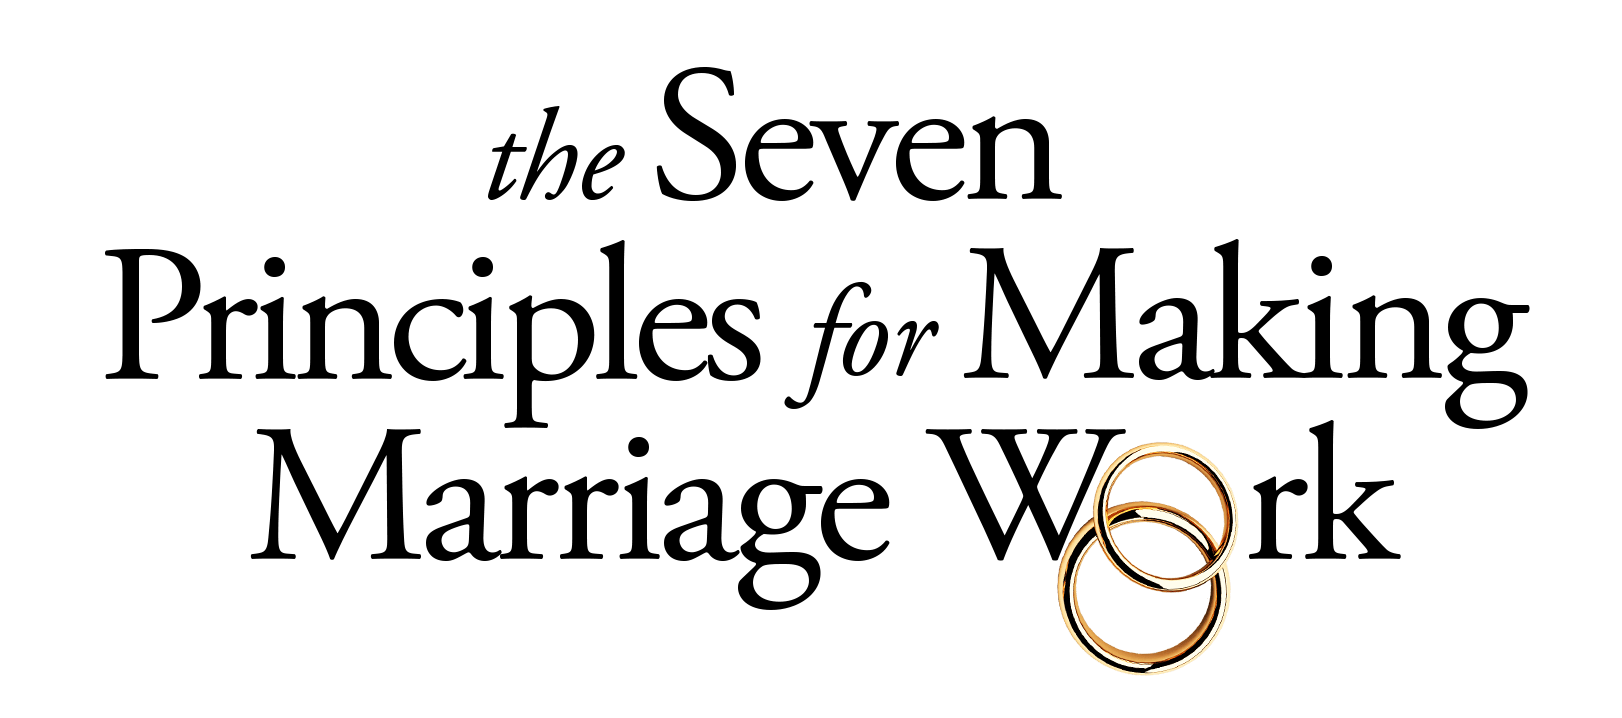 7 Principles for Making Marriage Work Workshop